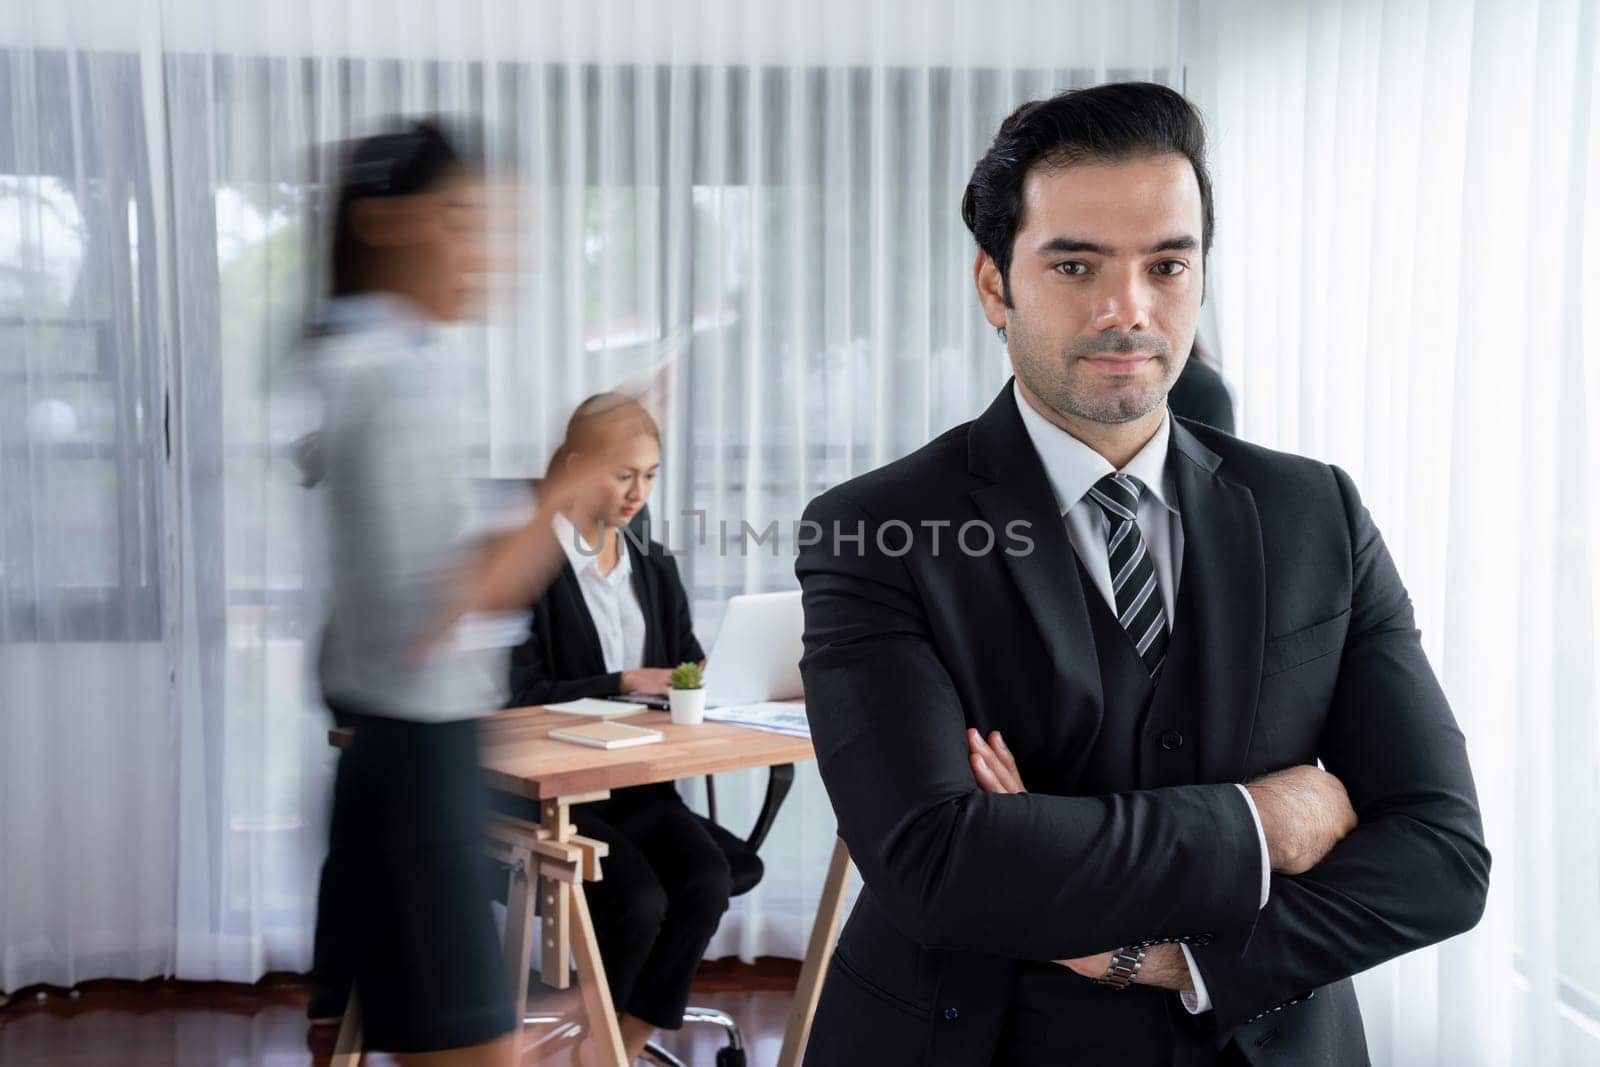 Businessman portrait and motion blur background. Habiliment by biancoblue